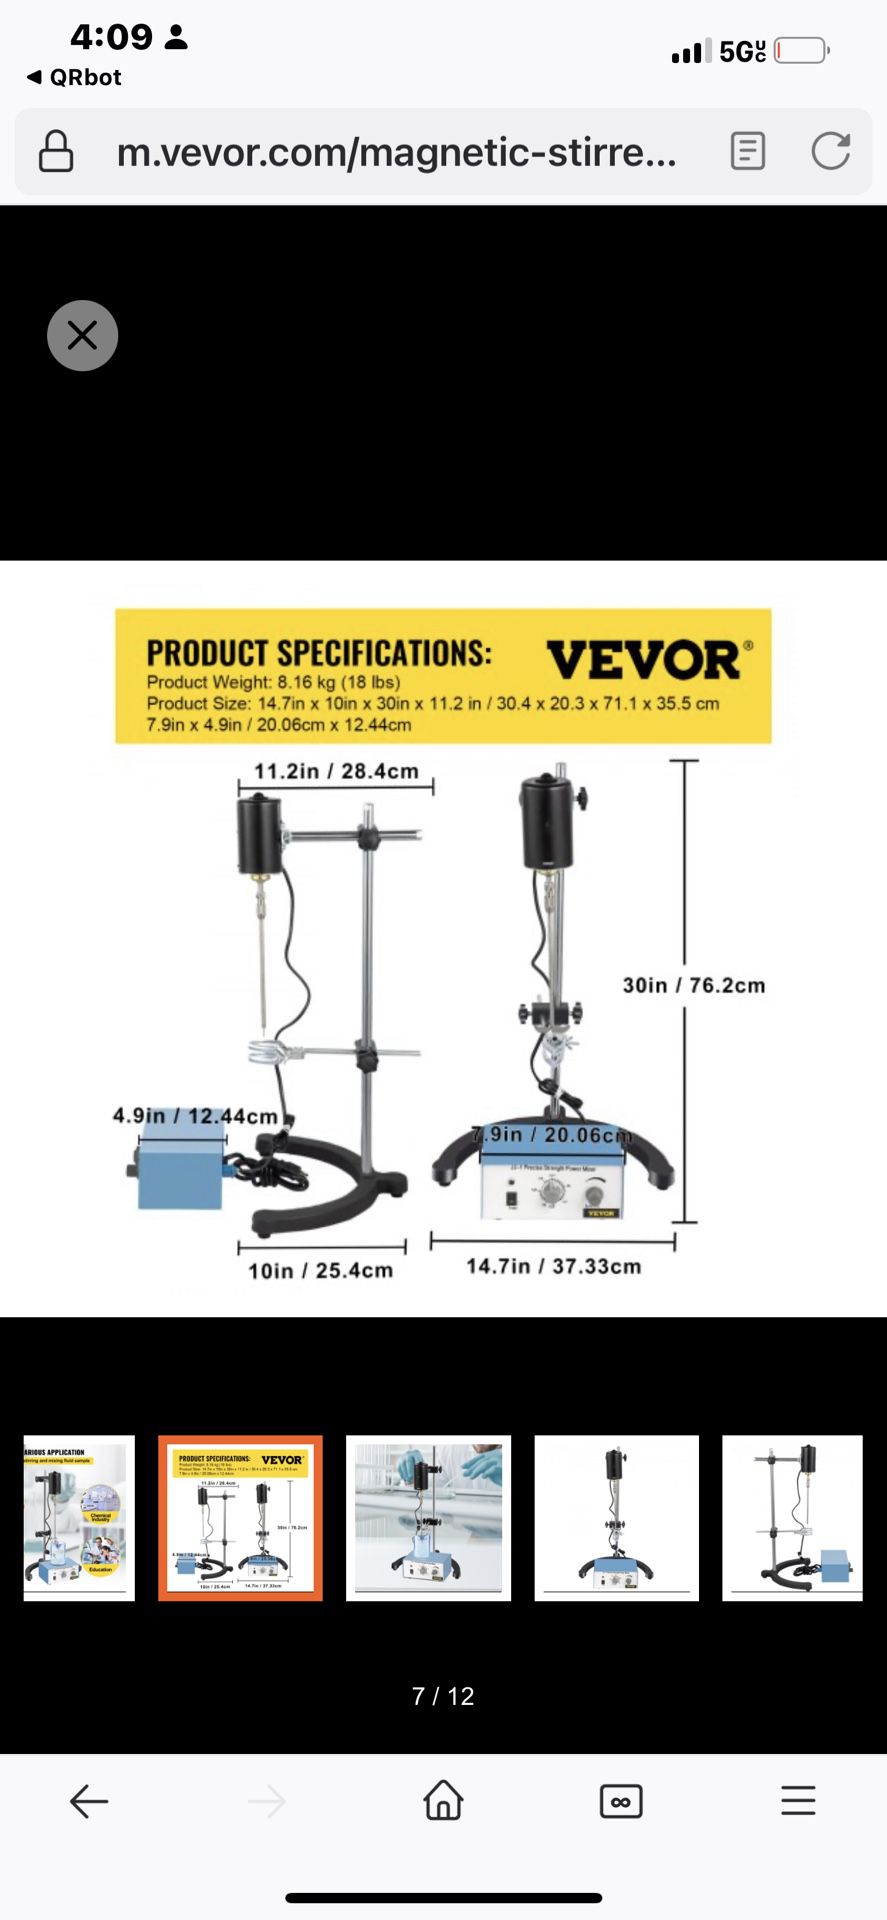 VEVOR Electric Overhead Stirrer Mixer 0-3000 RPM Overhead